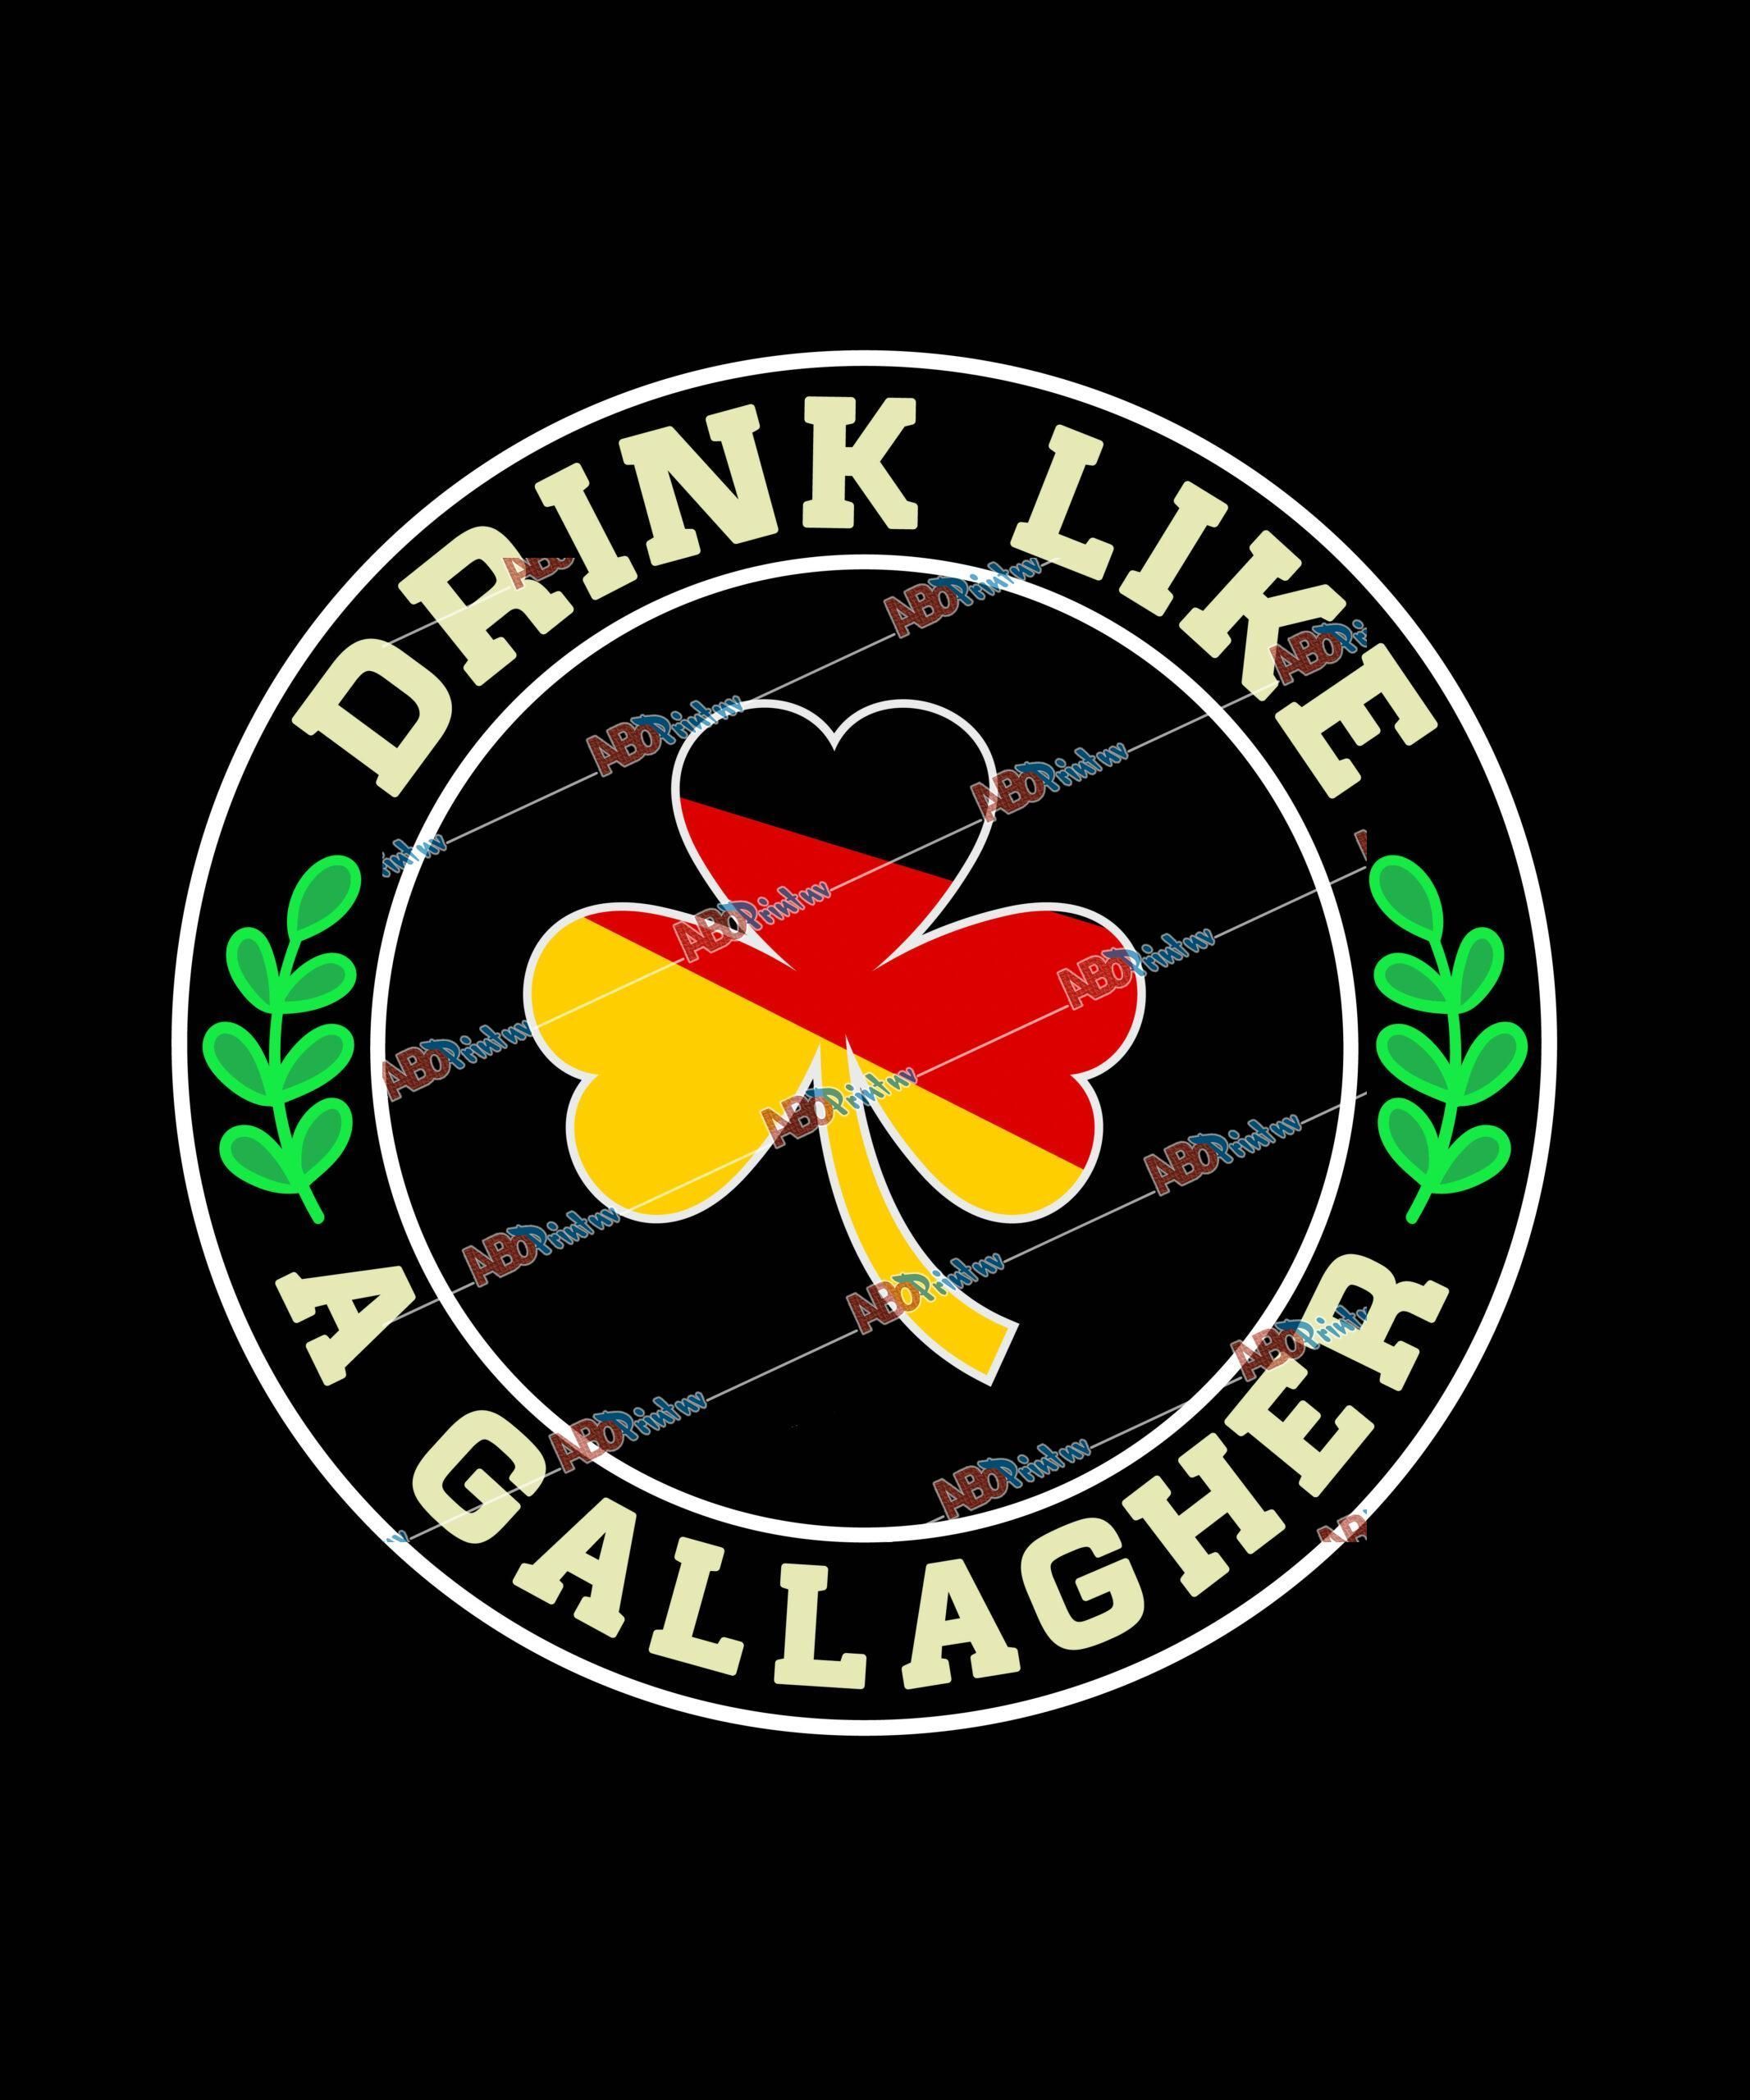 Drink Like A Gallagher